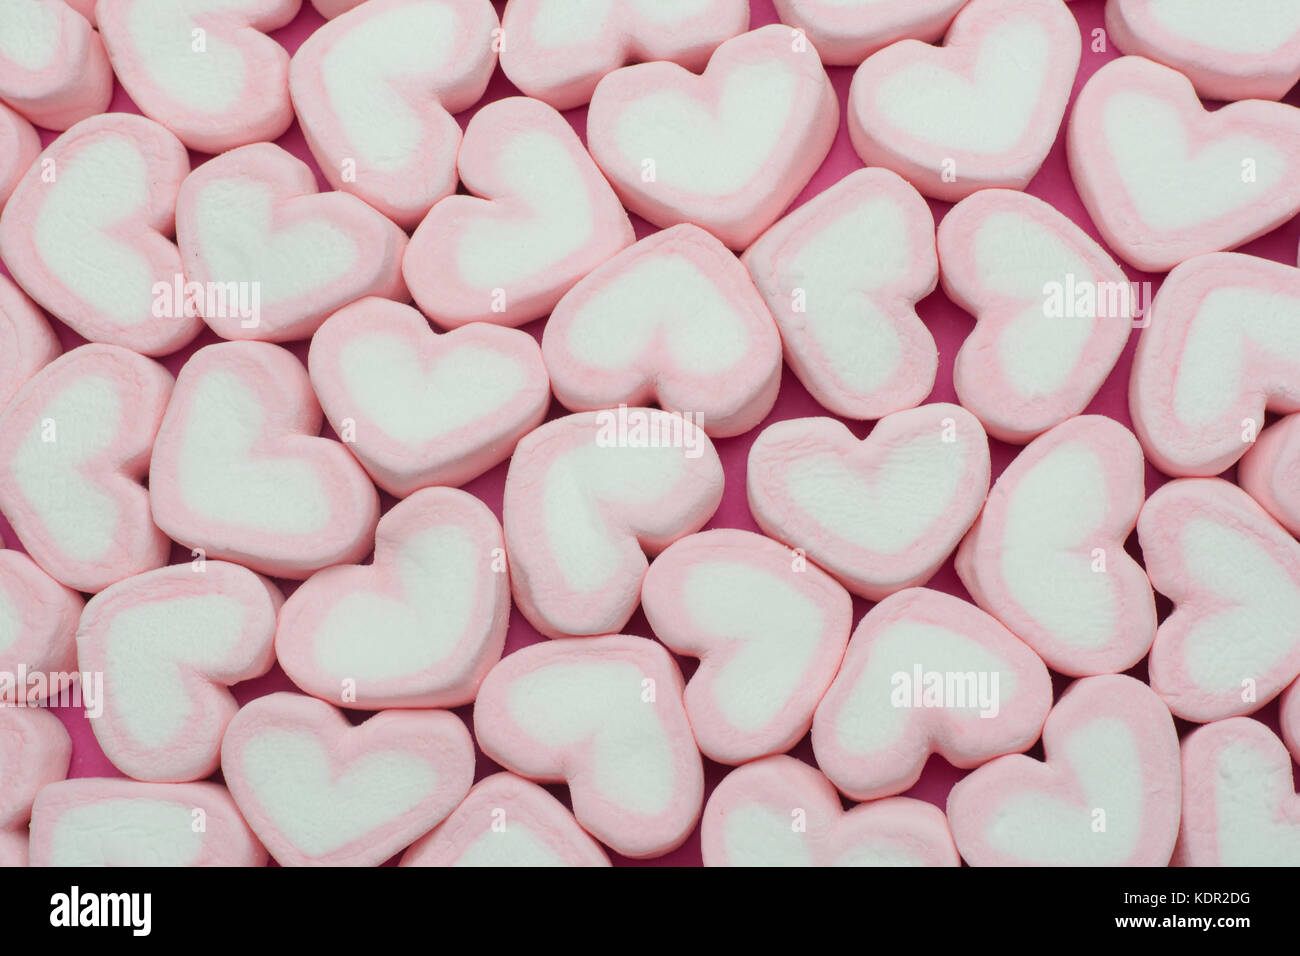 Pink heart shaped marshmallows background Stock Photo - Alamy